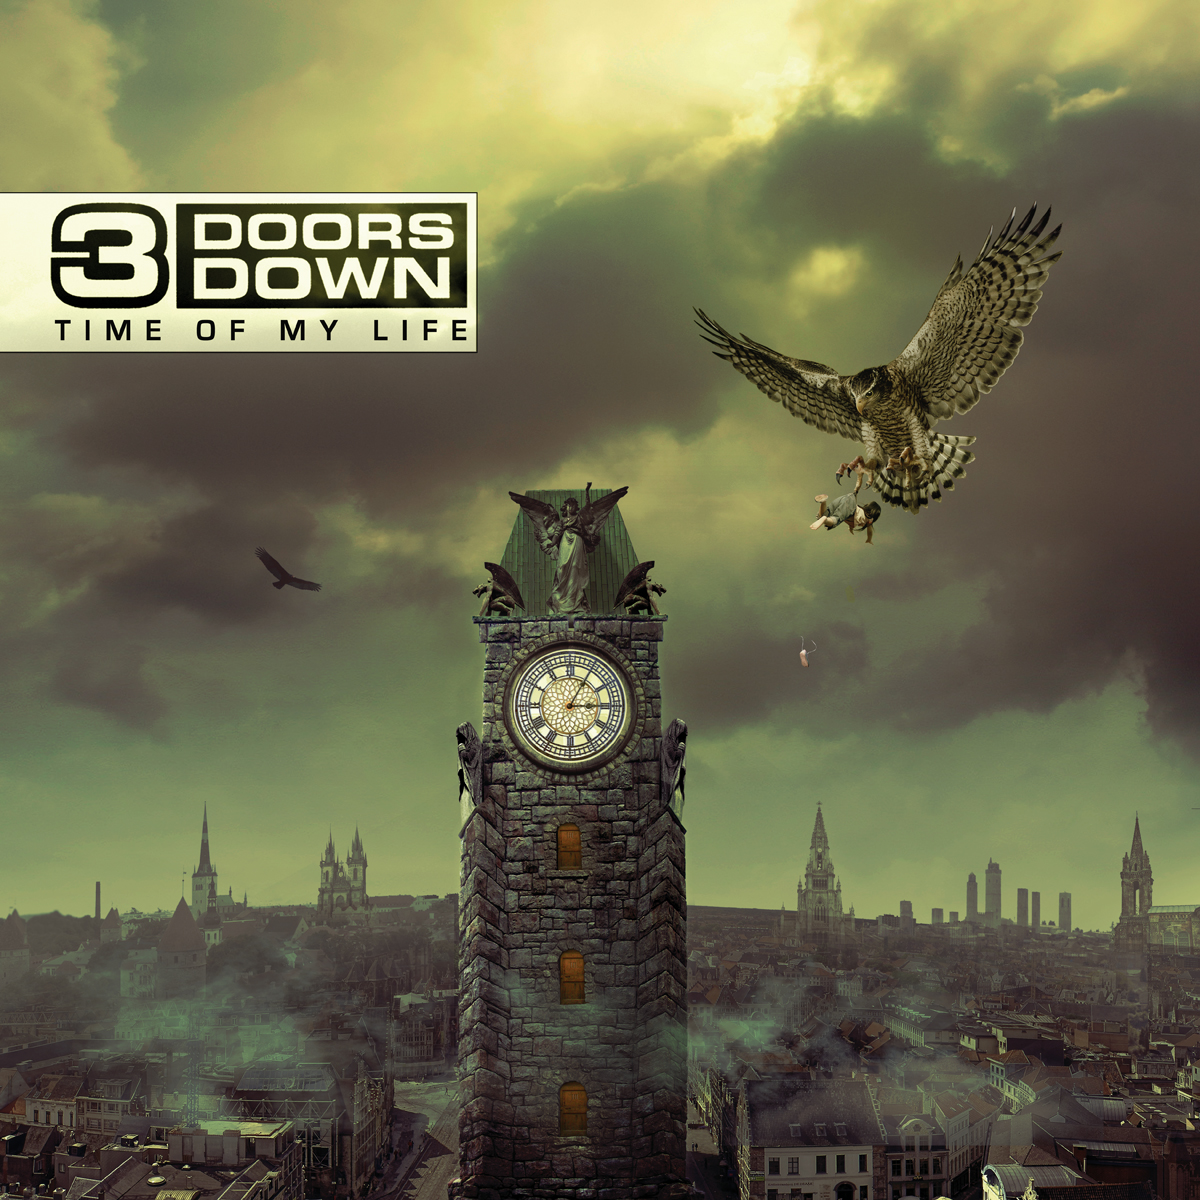 The TMJ Charts New 3 Doors Down Album Cover